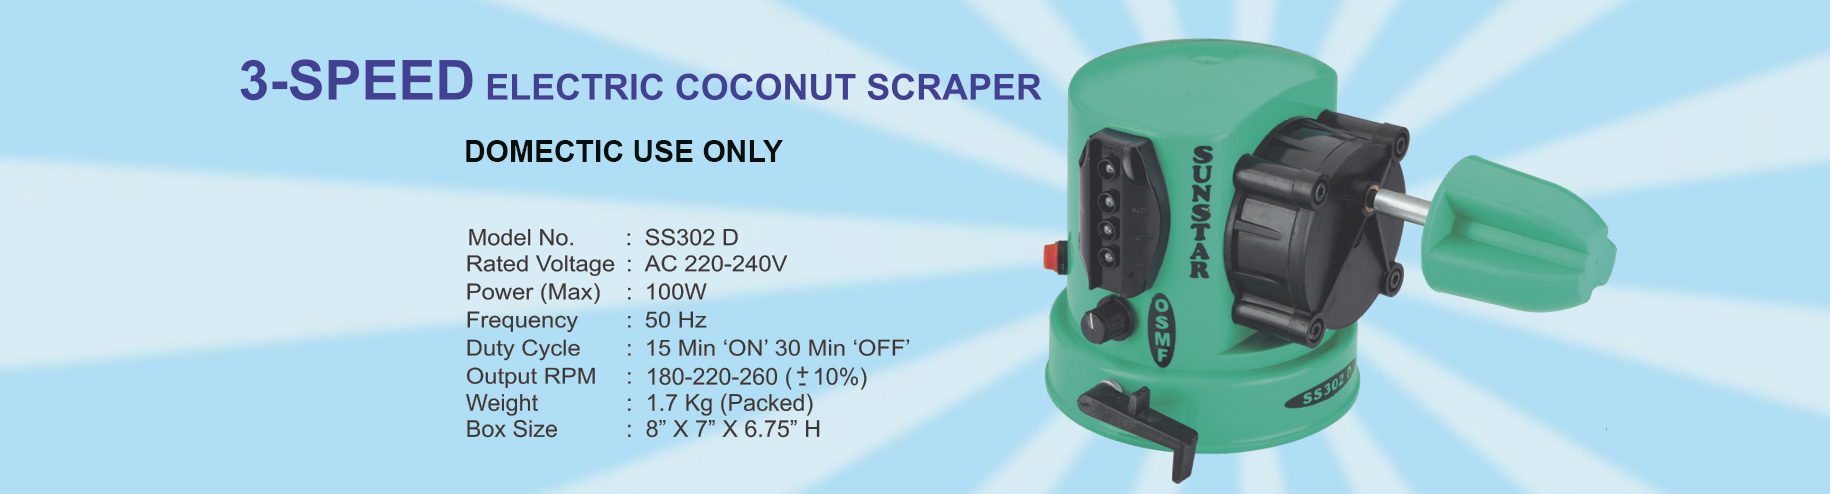 Electric Coconut Scraper by Sun Industries, Mumbai 